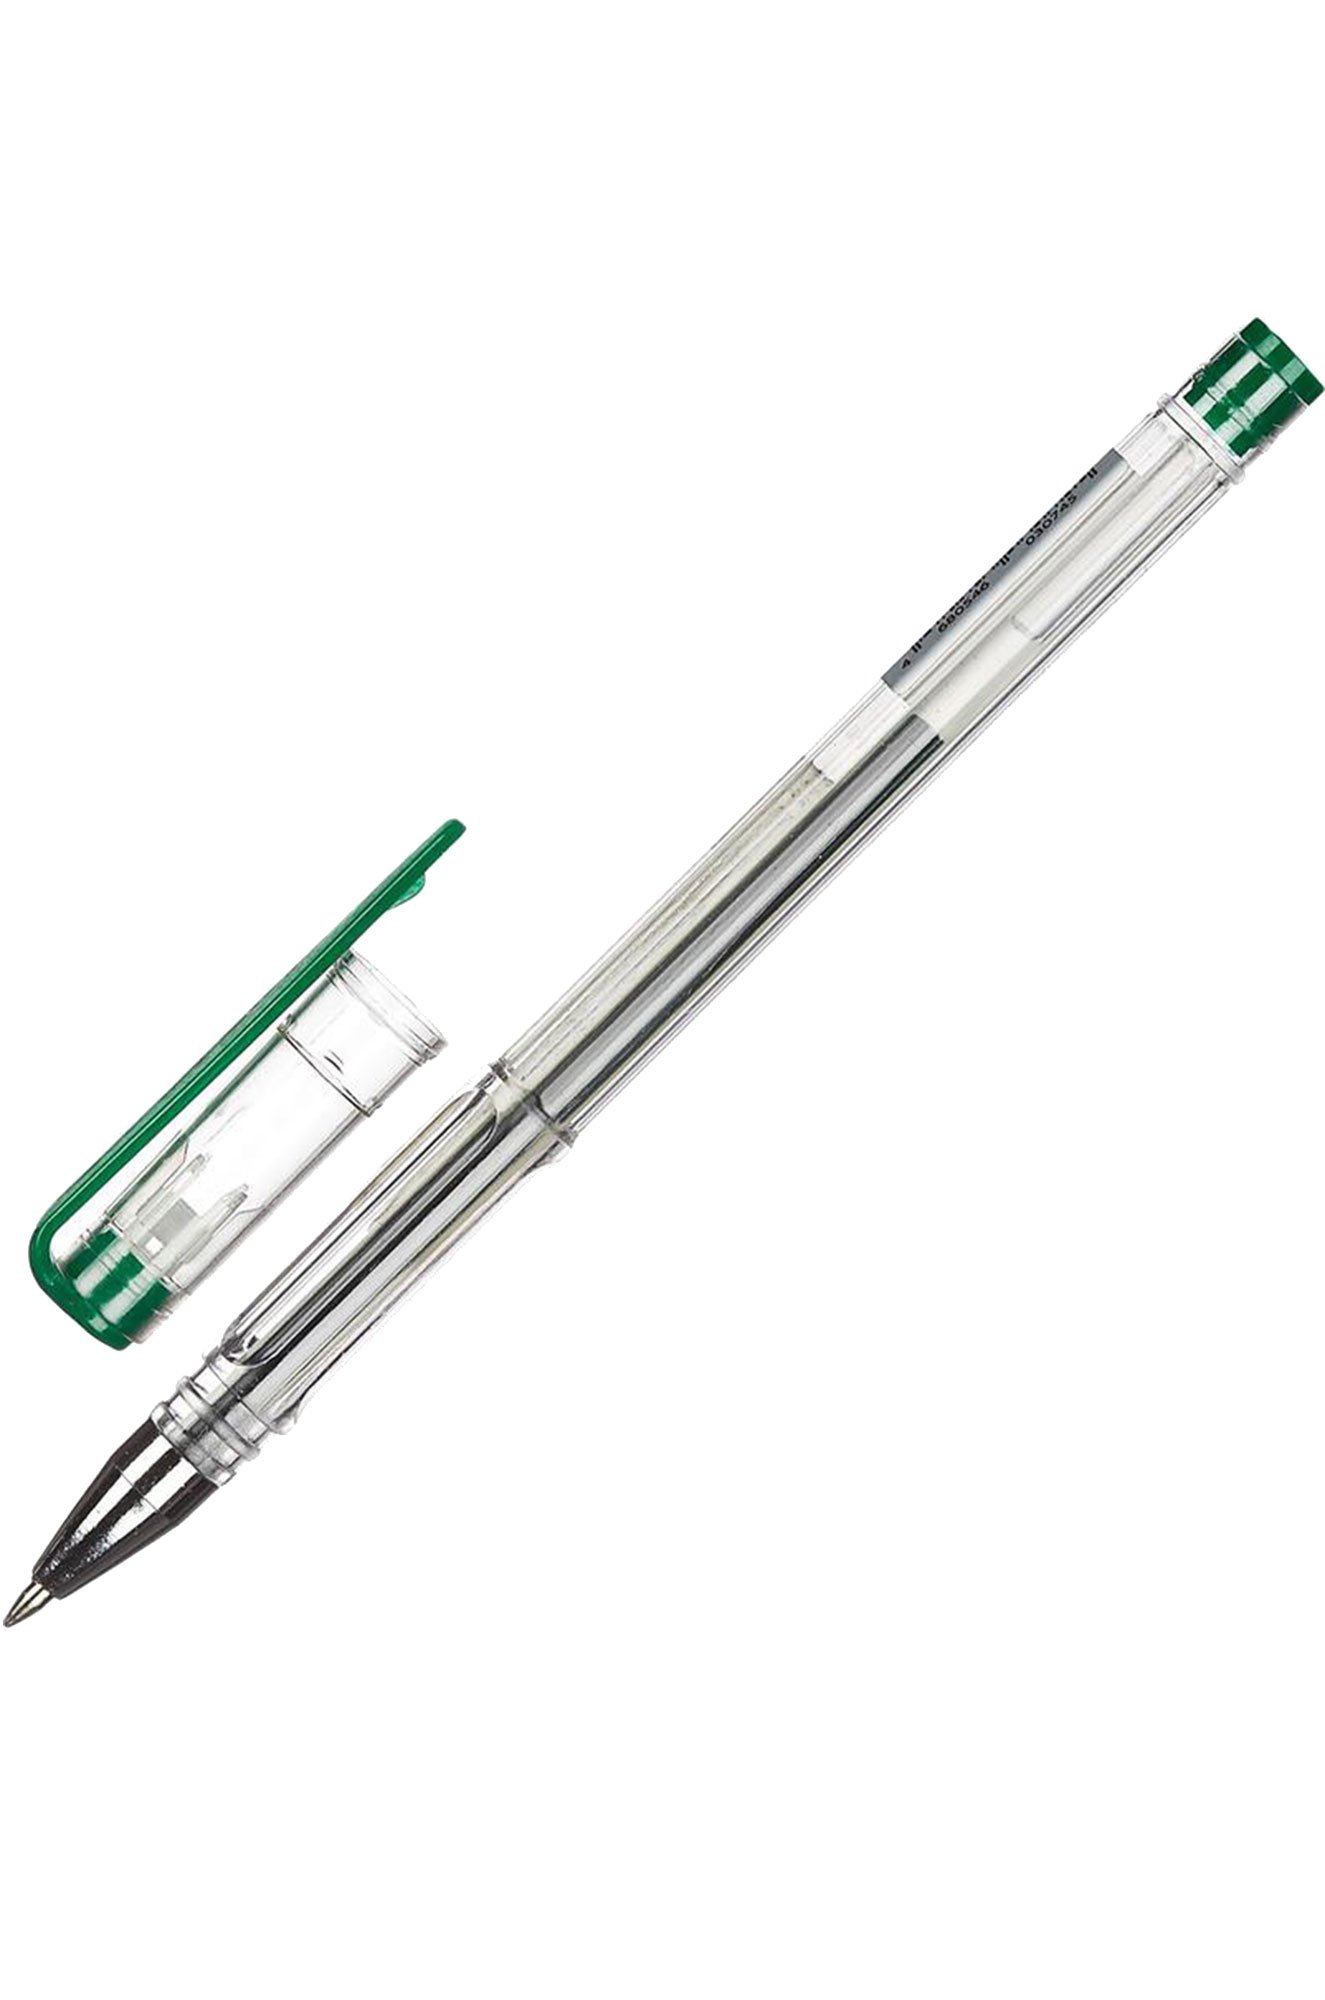 Ручка гелевая Attache